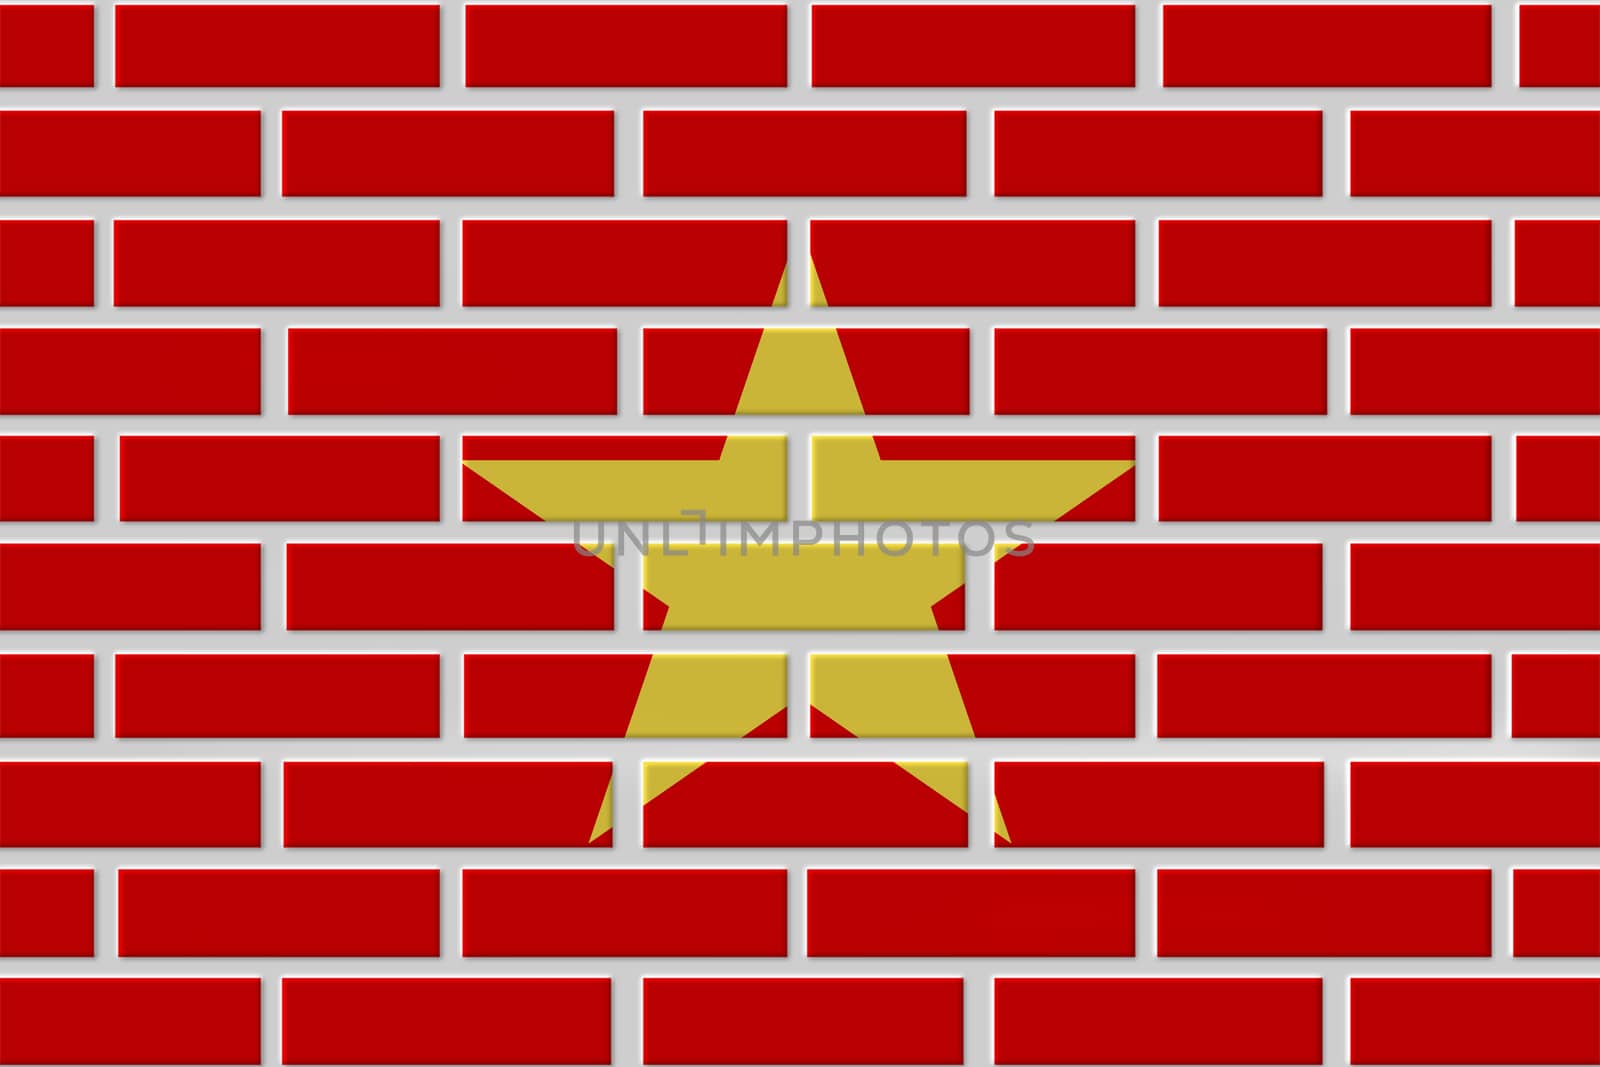 Vietnam painted flag. Patriotic brick flag illustration background. National flag of Vietnam